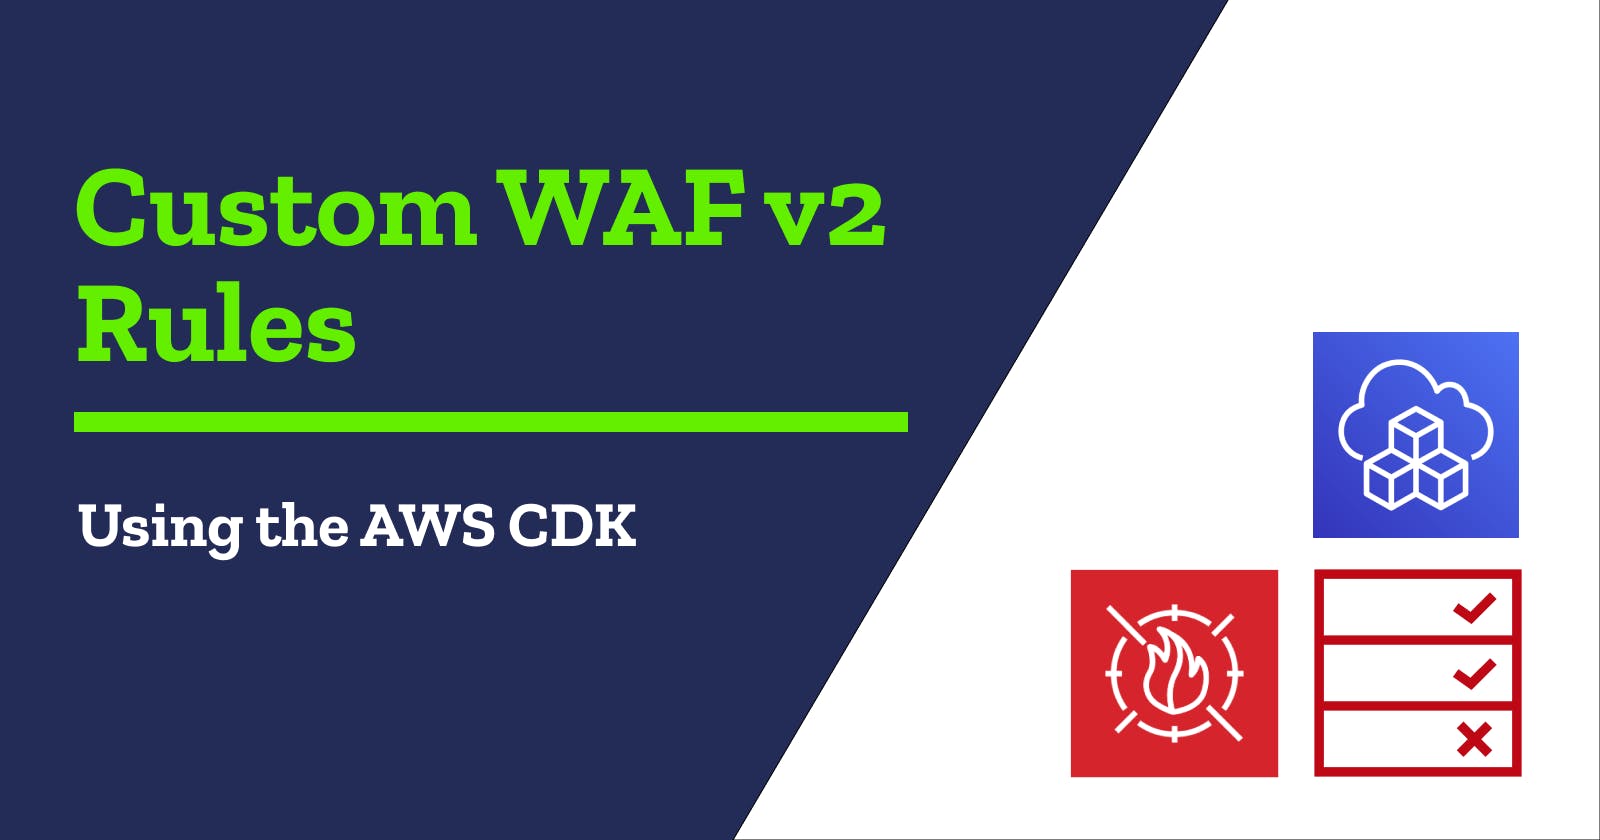 Deploying a Custom WAF v2 Rule with the AWS CDK